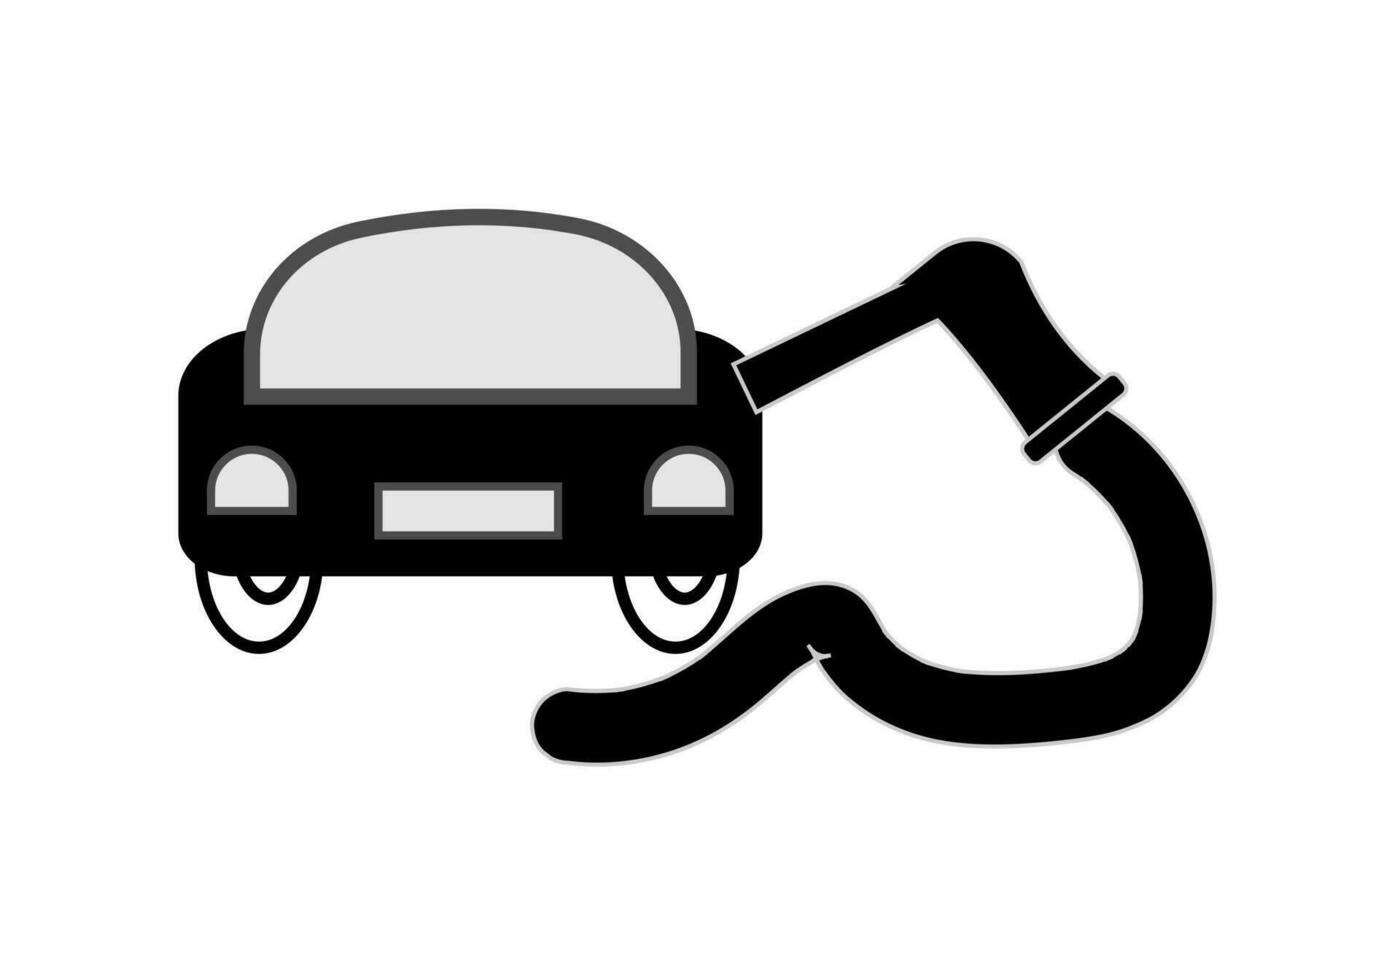 Car service doodle icons, auto repair vector signs